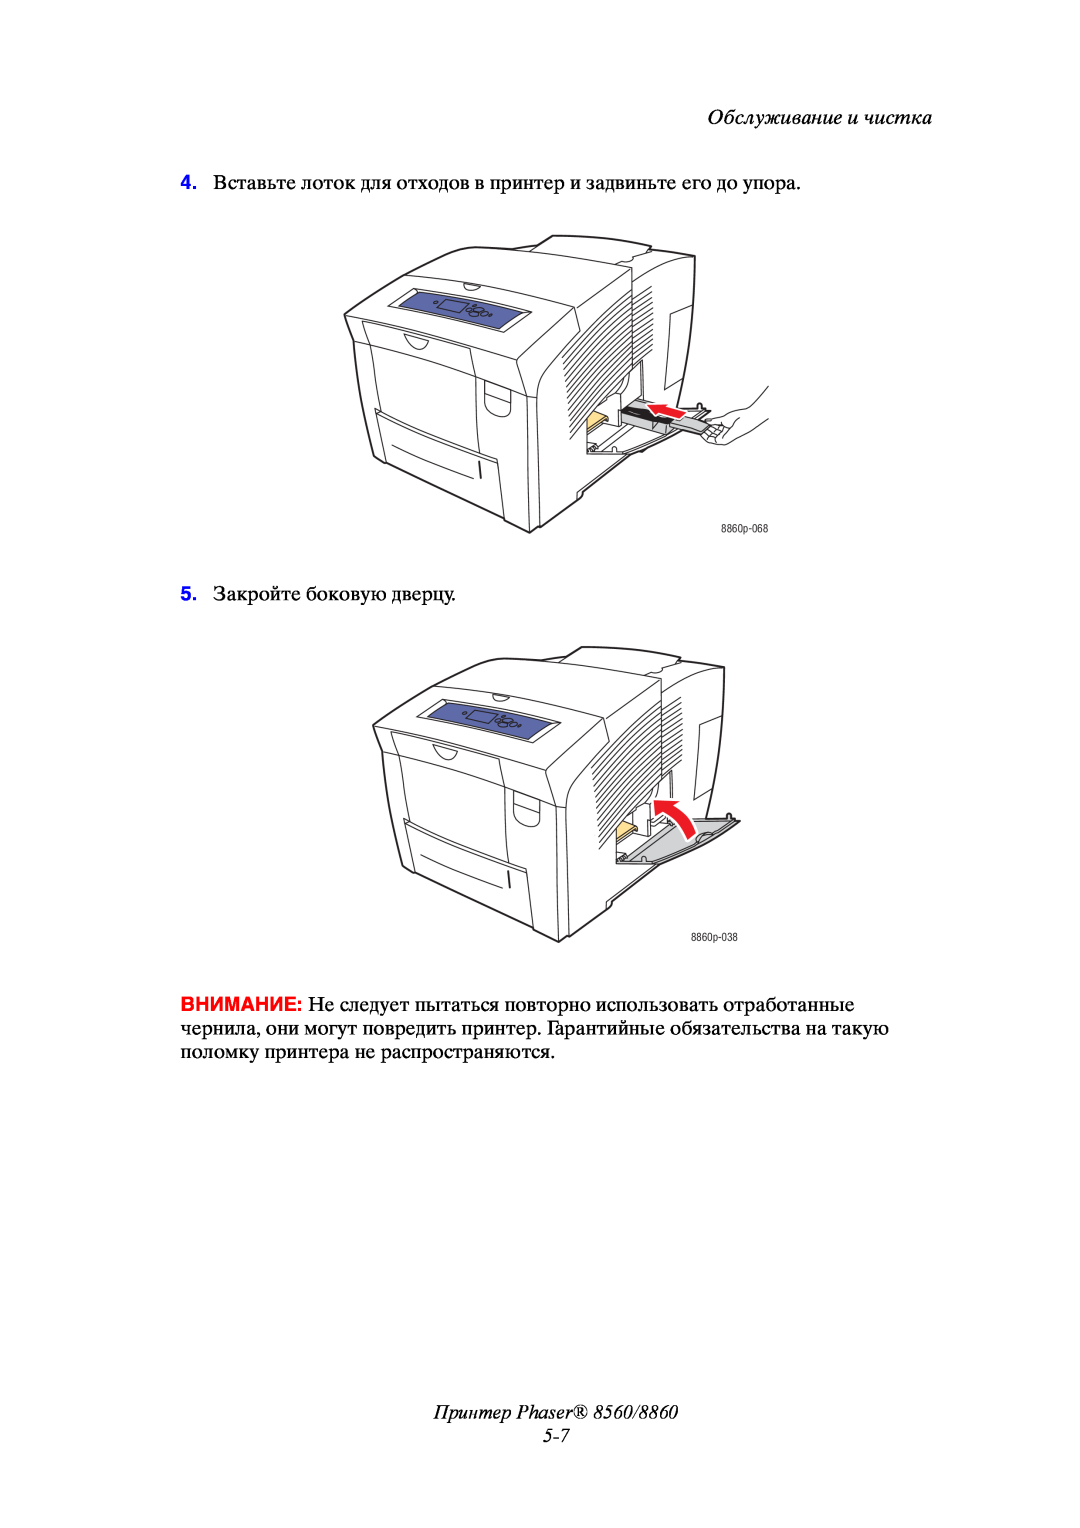 Xerox manual Принтер Phaser 8560/8860 5-7, Обслуживание и чистка, 5. Закройте боковую дверцу, 8860p-068, 8860p-038 